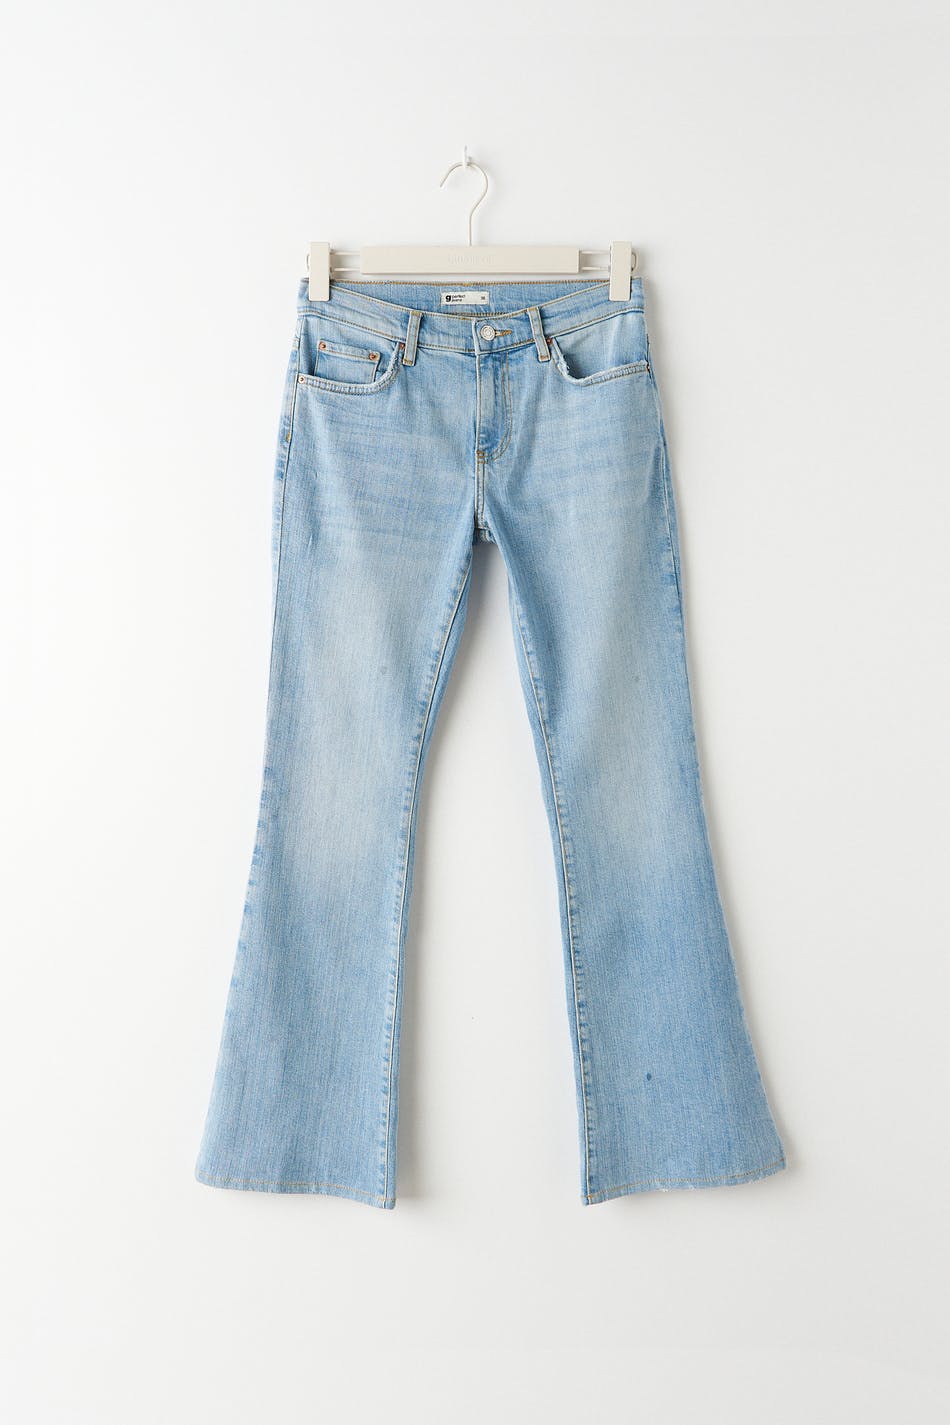 Low waist bootcut PETITE jeans